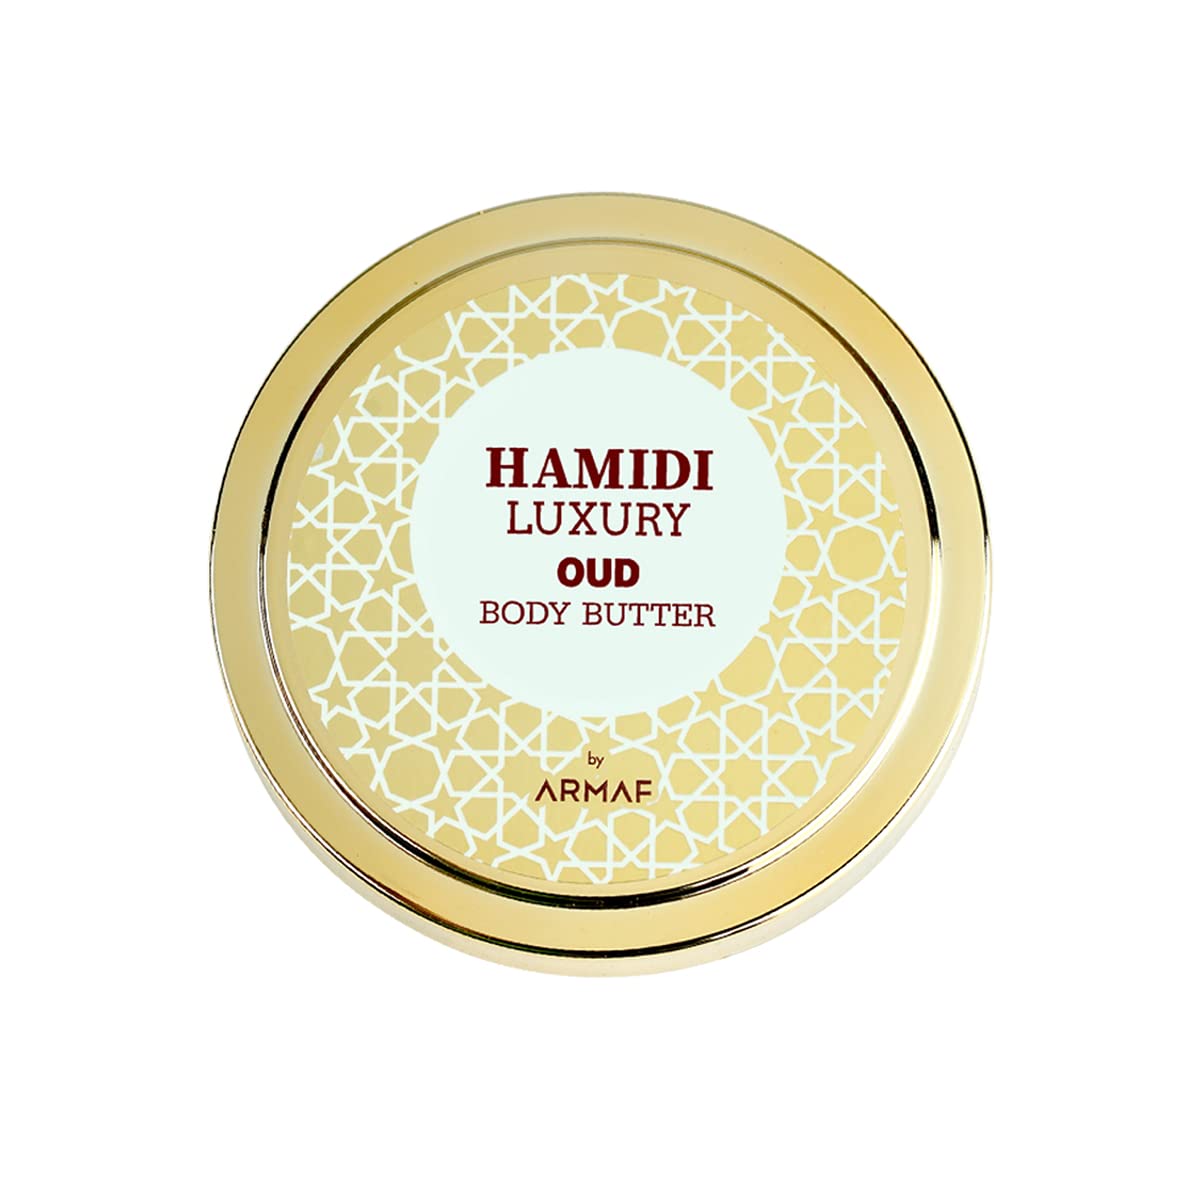 Hamidi Luxury Oud Butter Butter By Armaf (250ml) Hamidi Luxury